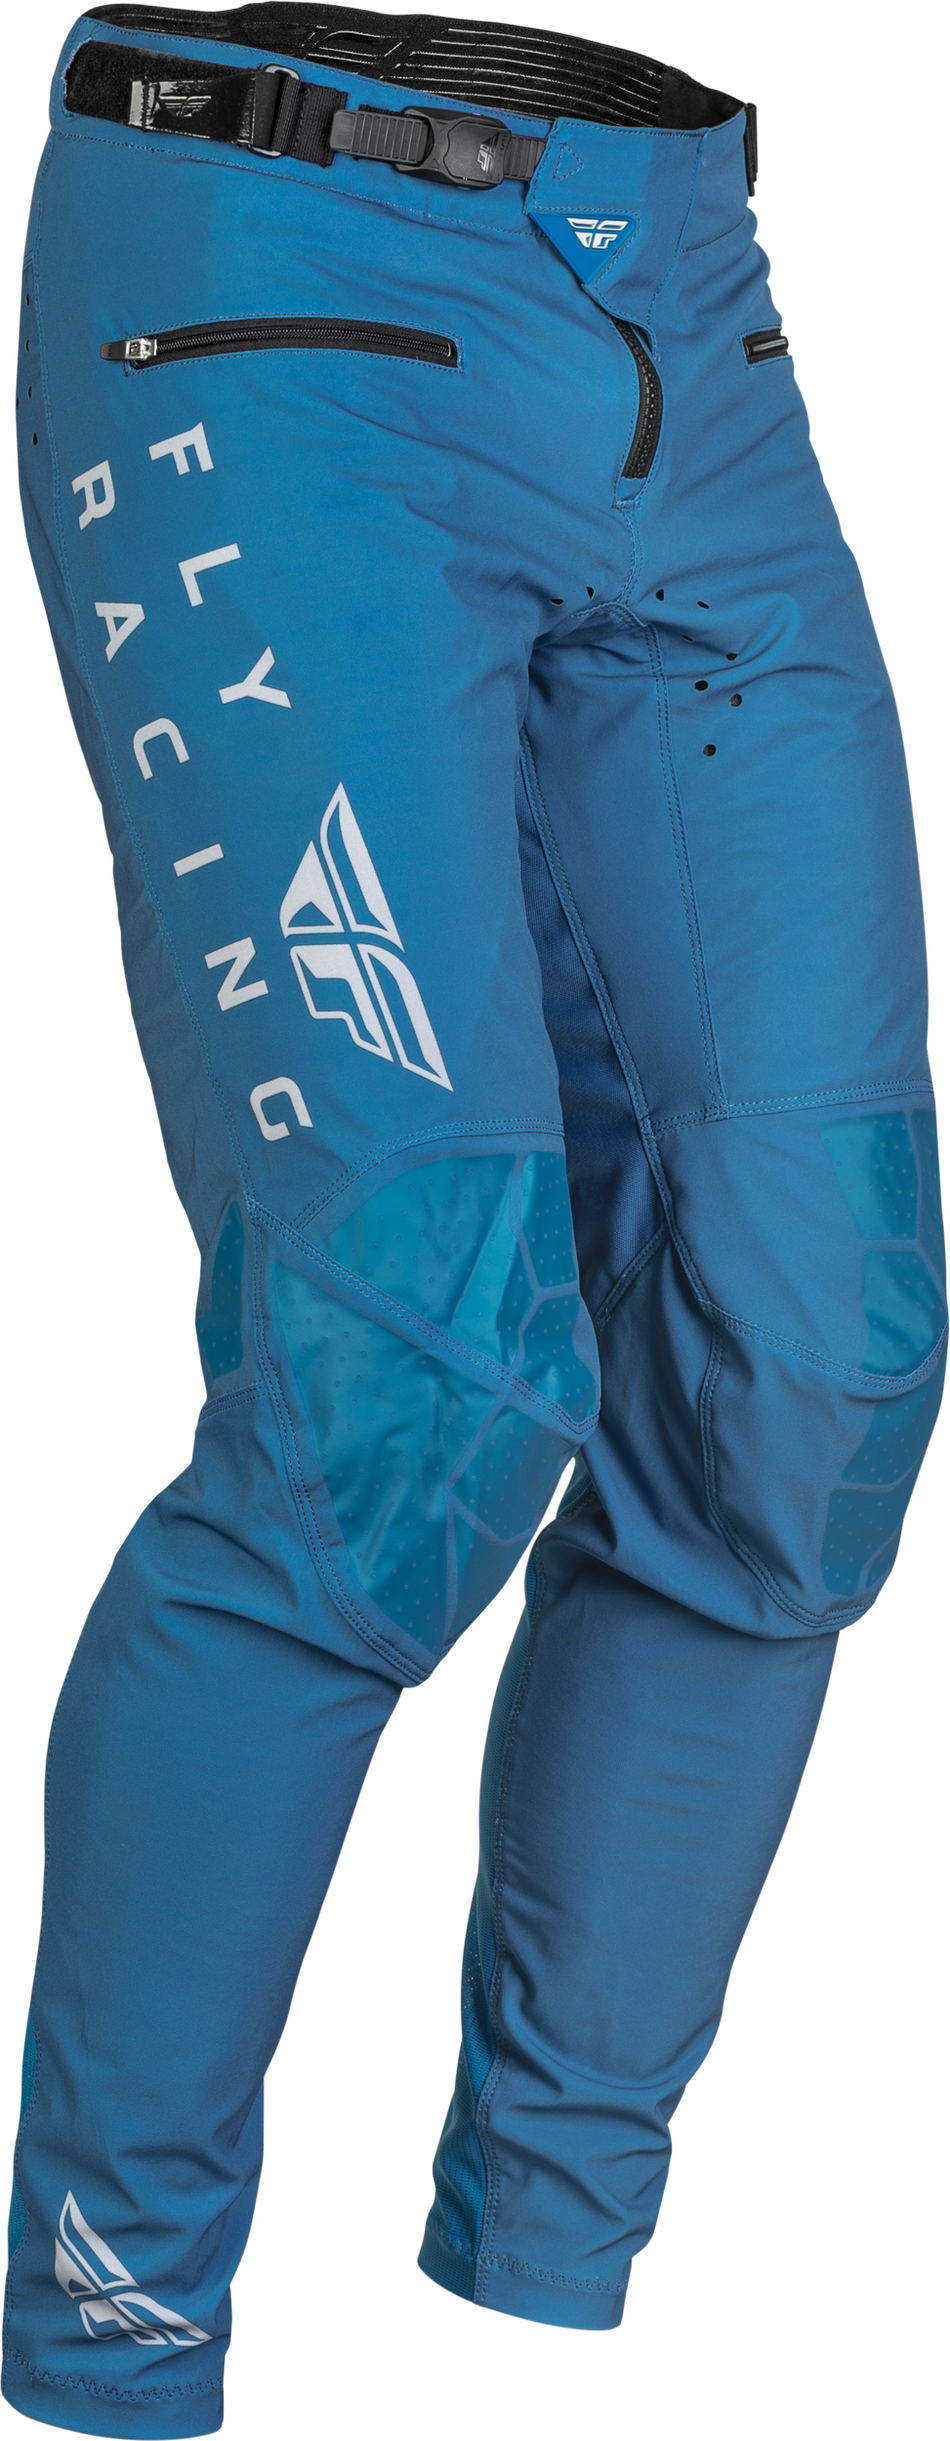 FLY RACING Youth Radium Bicycle Pants Slate Blue/Grey Sz 20 376-04420